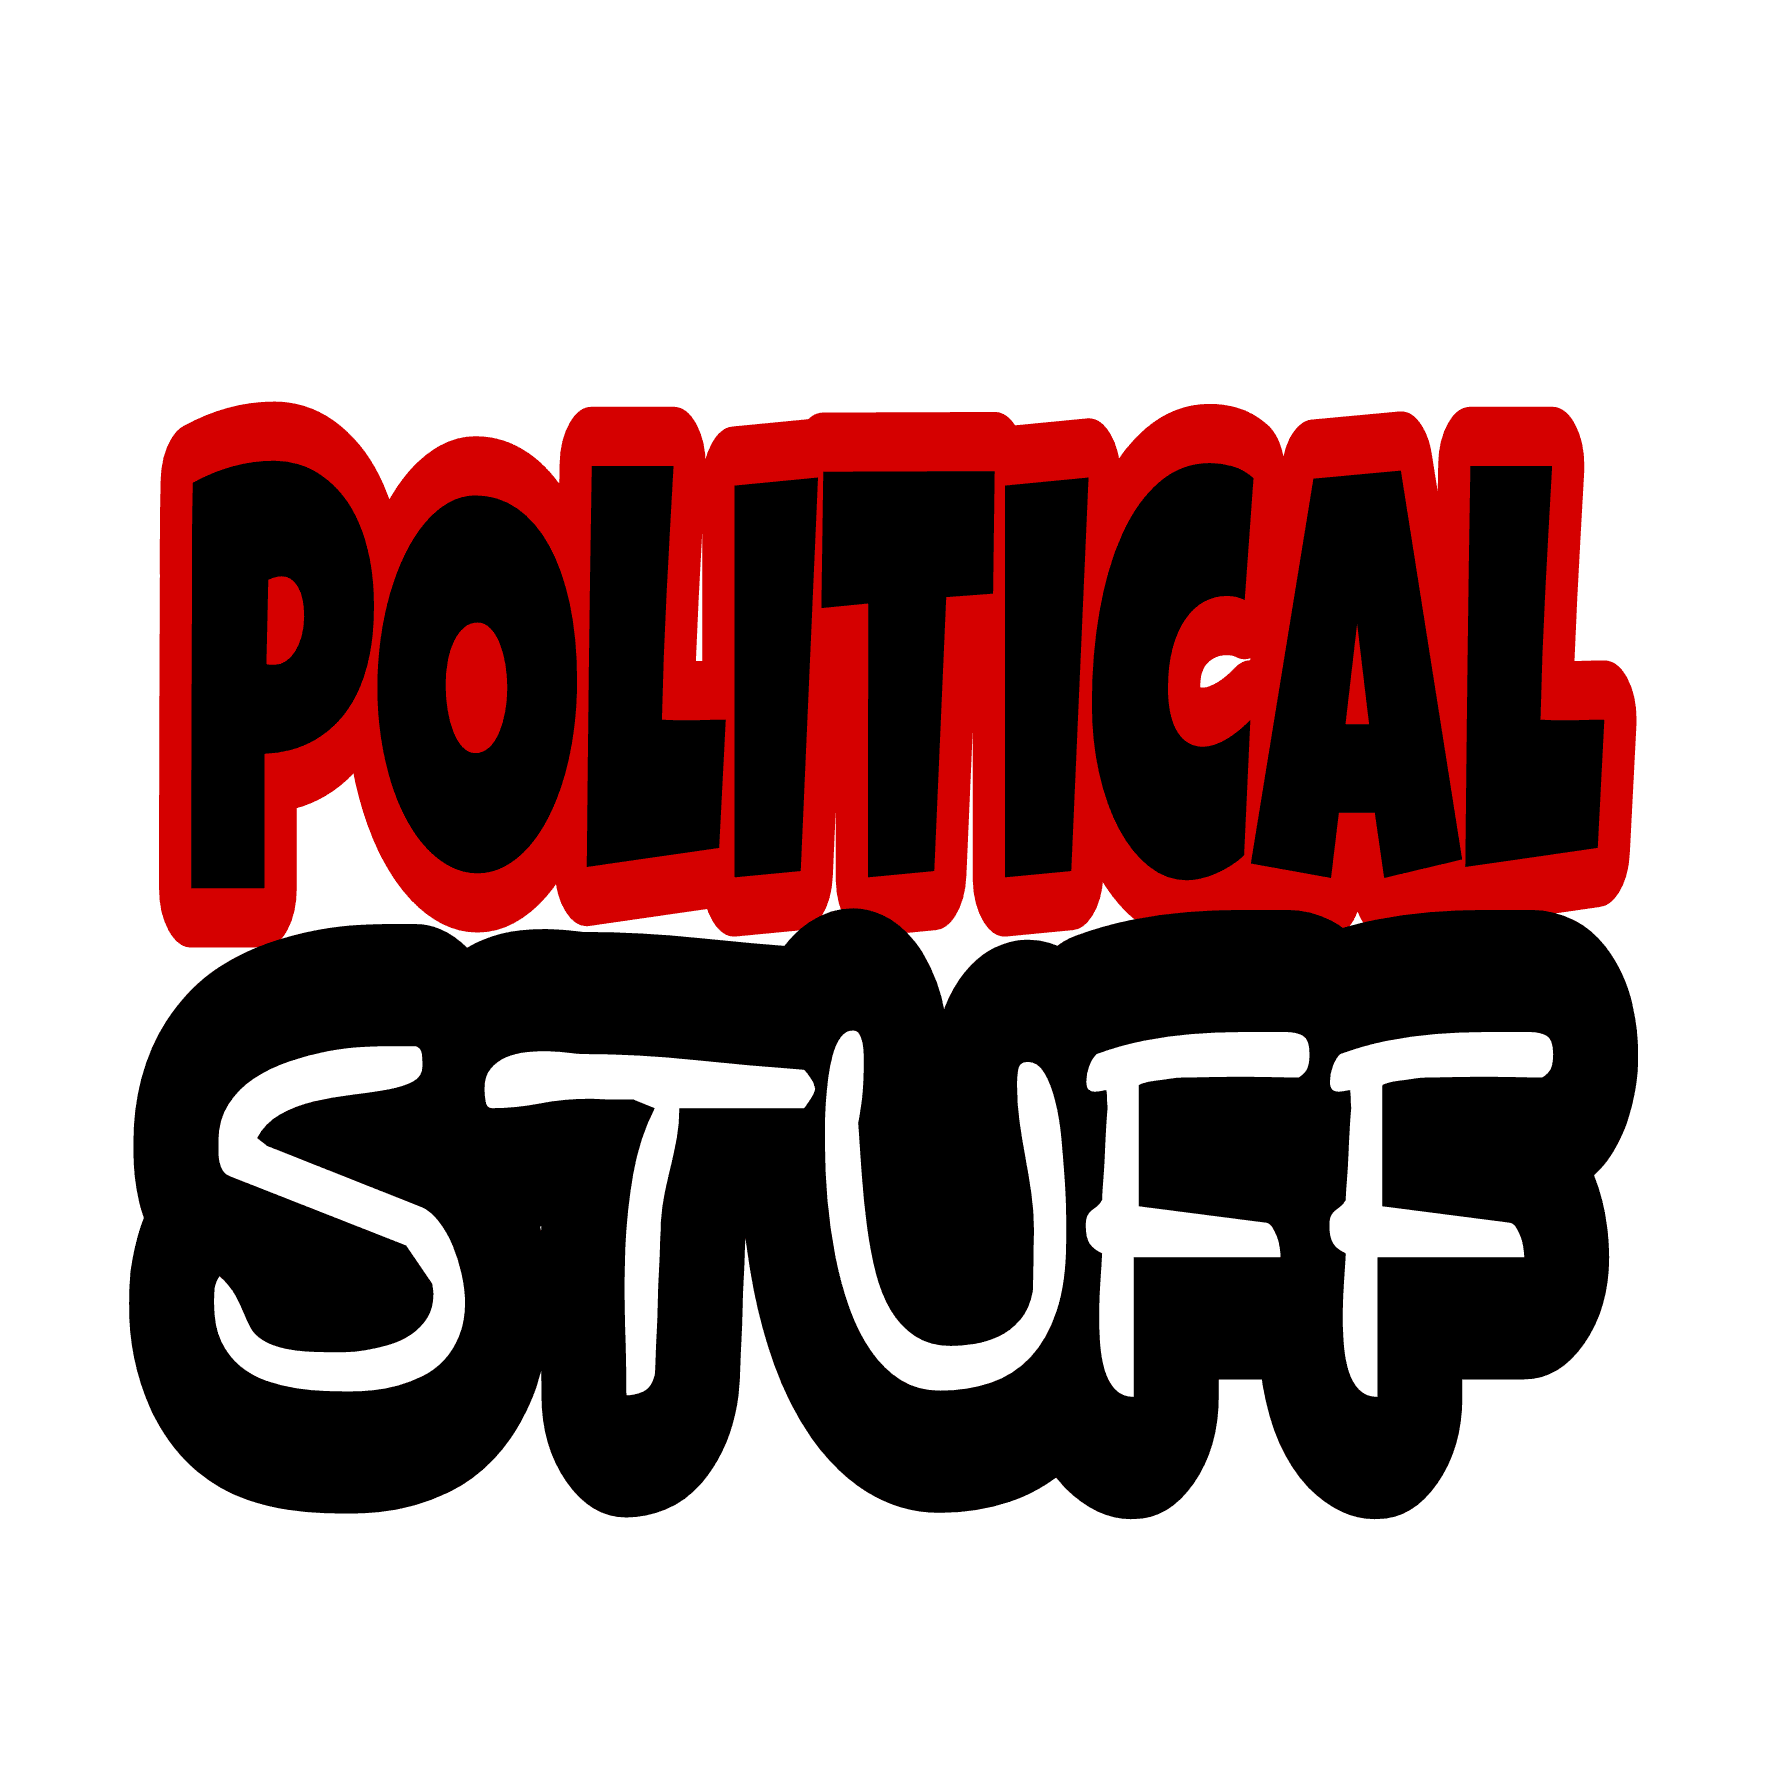 Political Stuff